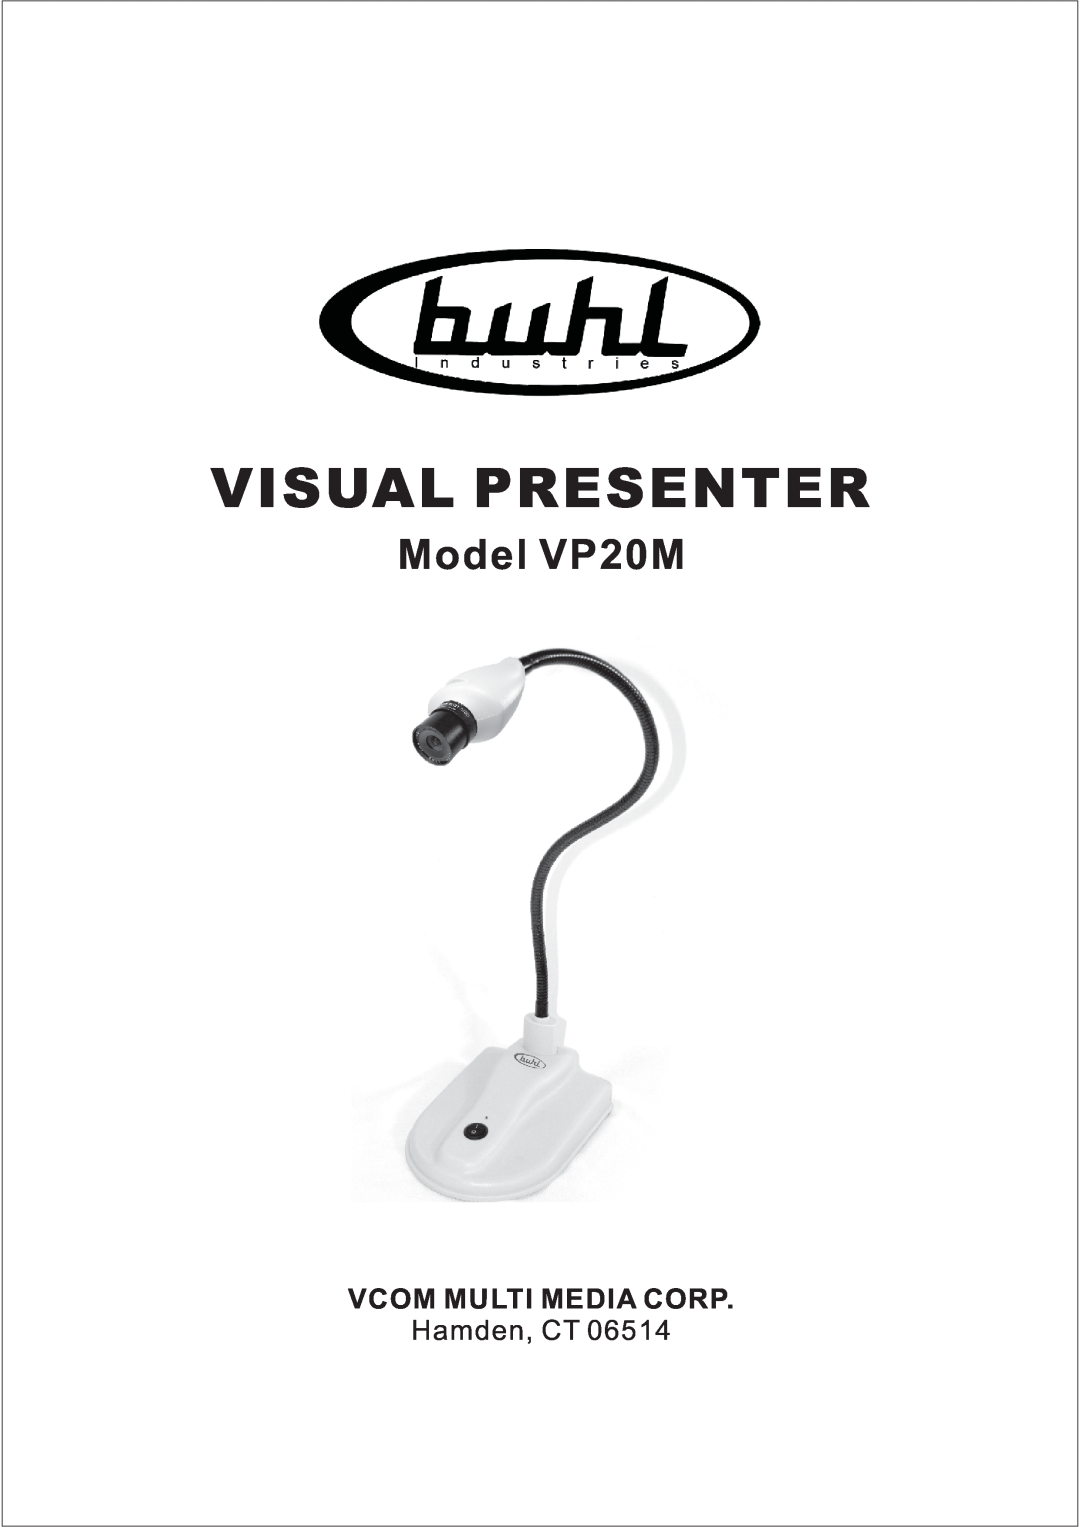 Buhl manual Model VP20M, Vcom Multi Media Corp, Hamden, CT, Visual Presenter 